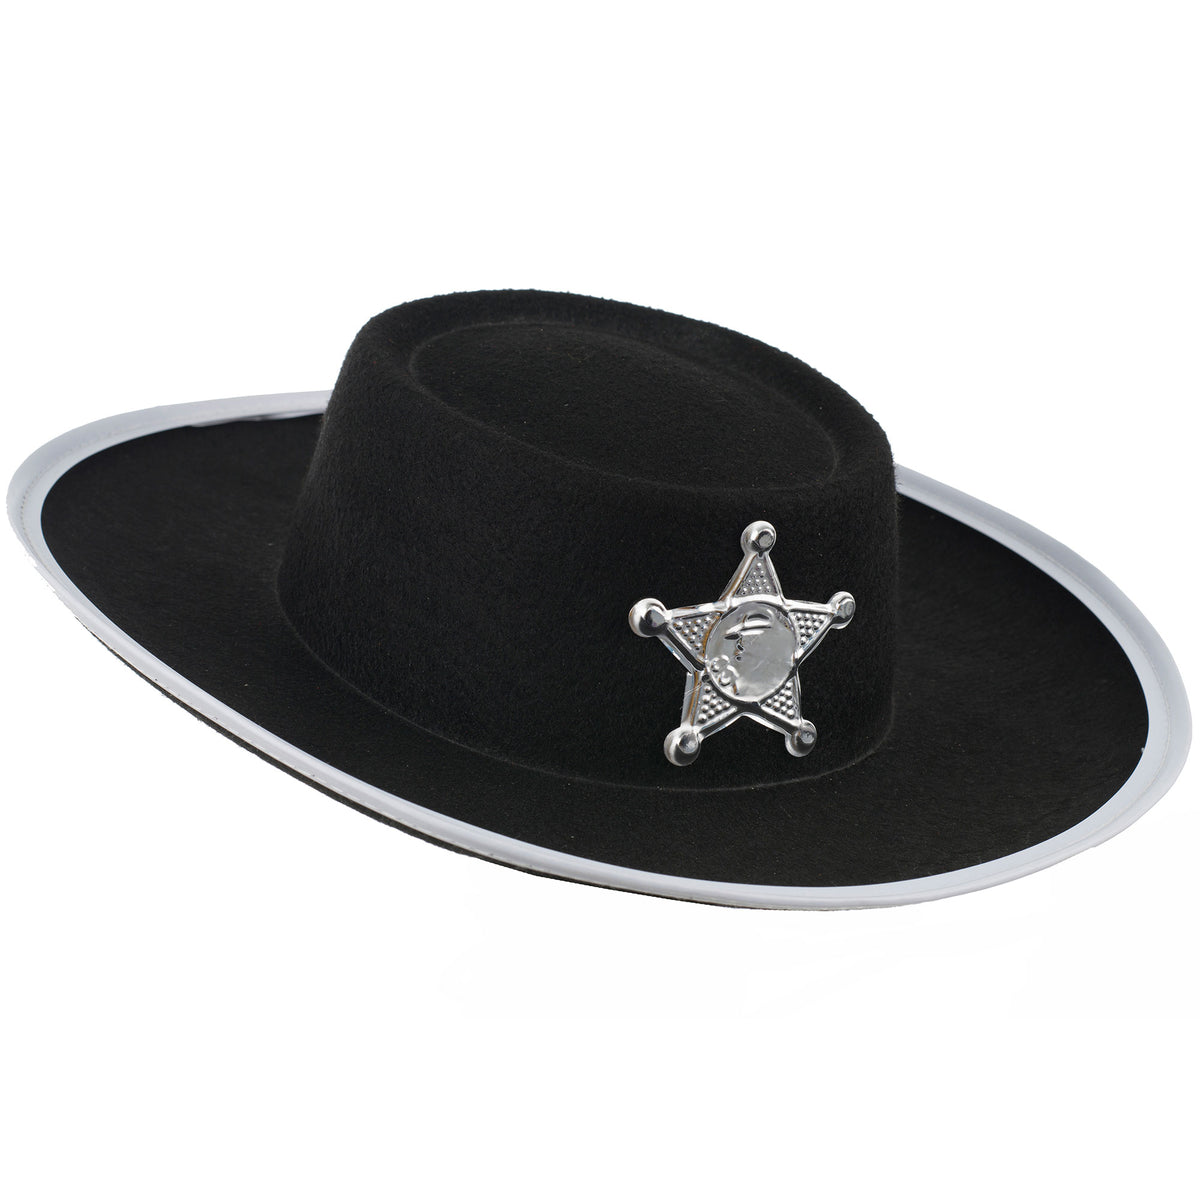 Childrens Roleplay Fancy Dress Cowboy Hat - Black